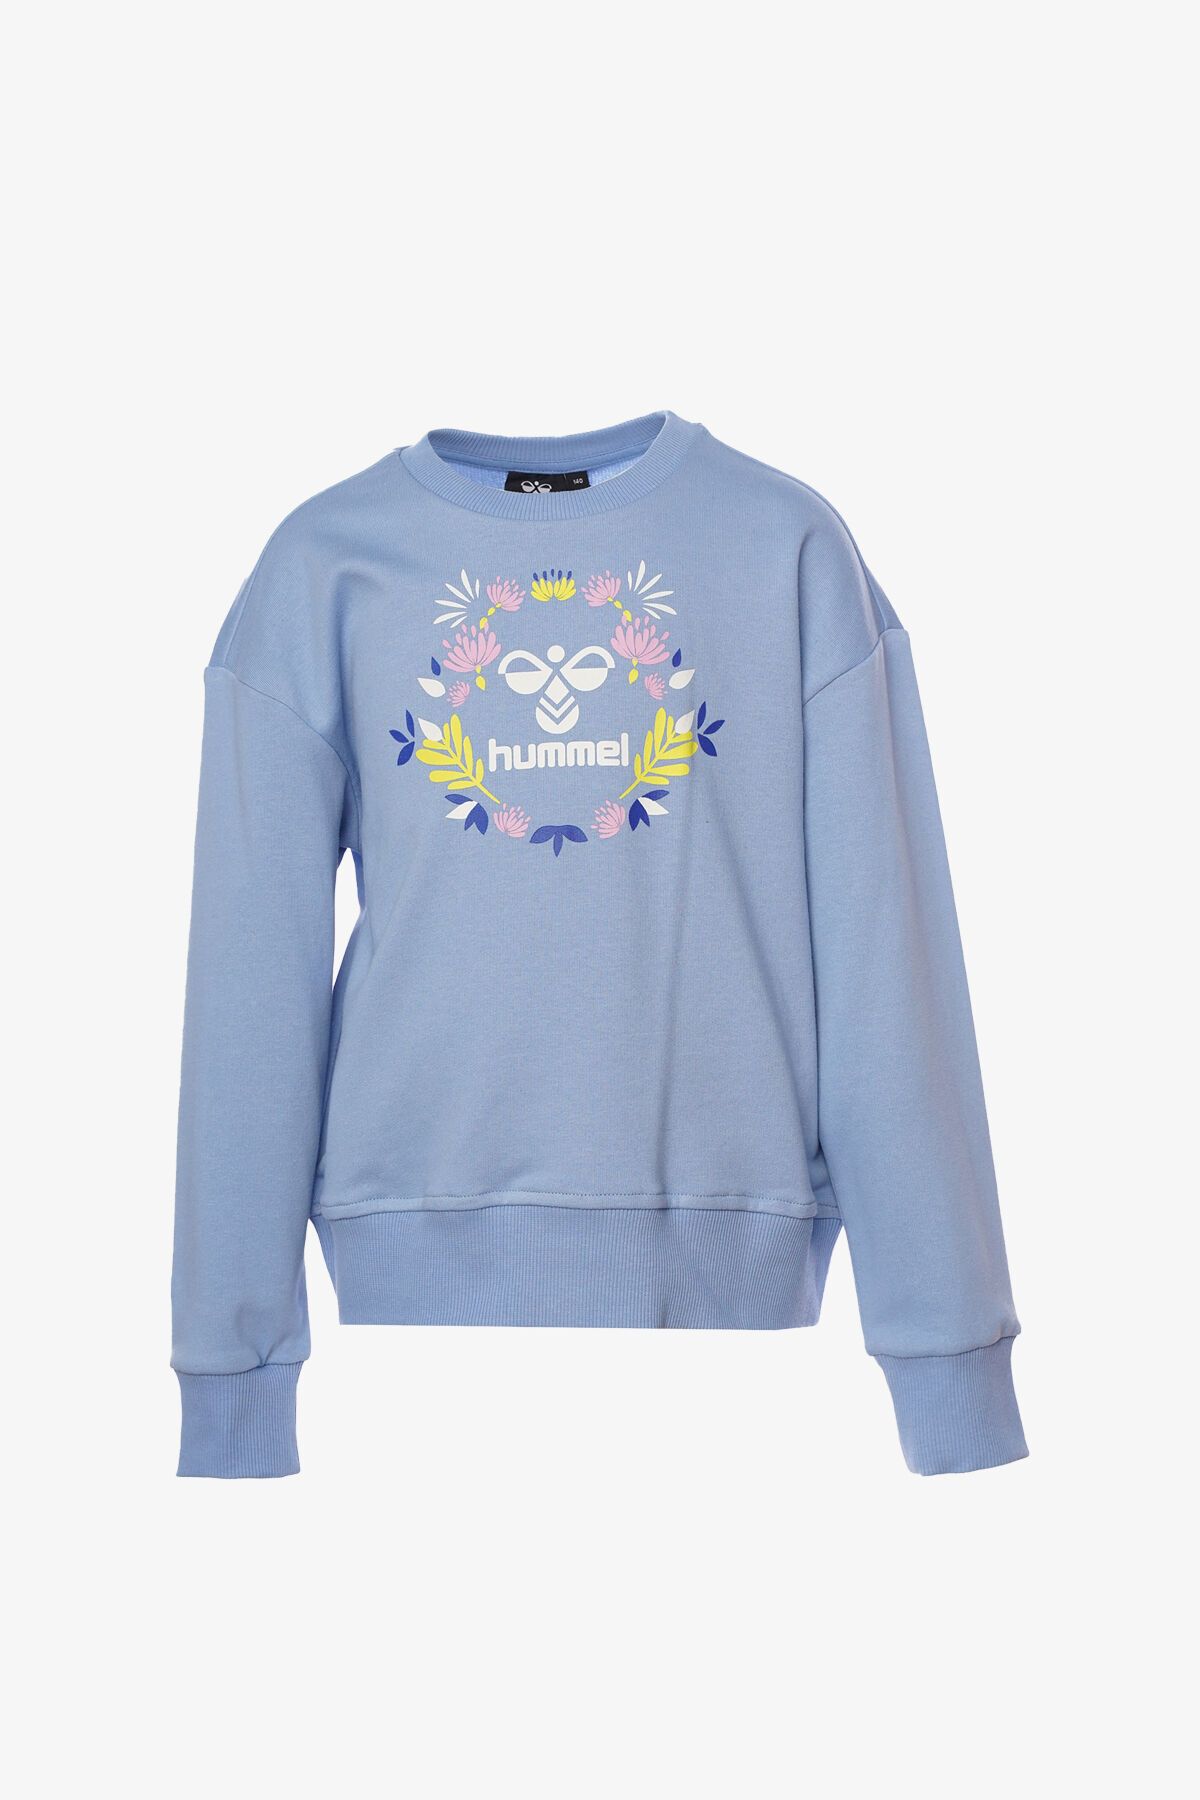 hummel Hmlcolby Child Blue sweatshirt